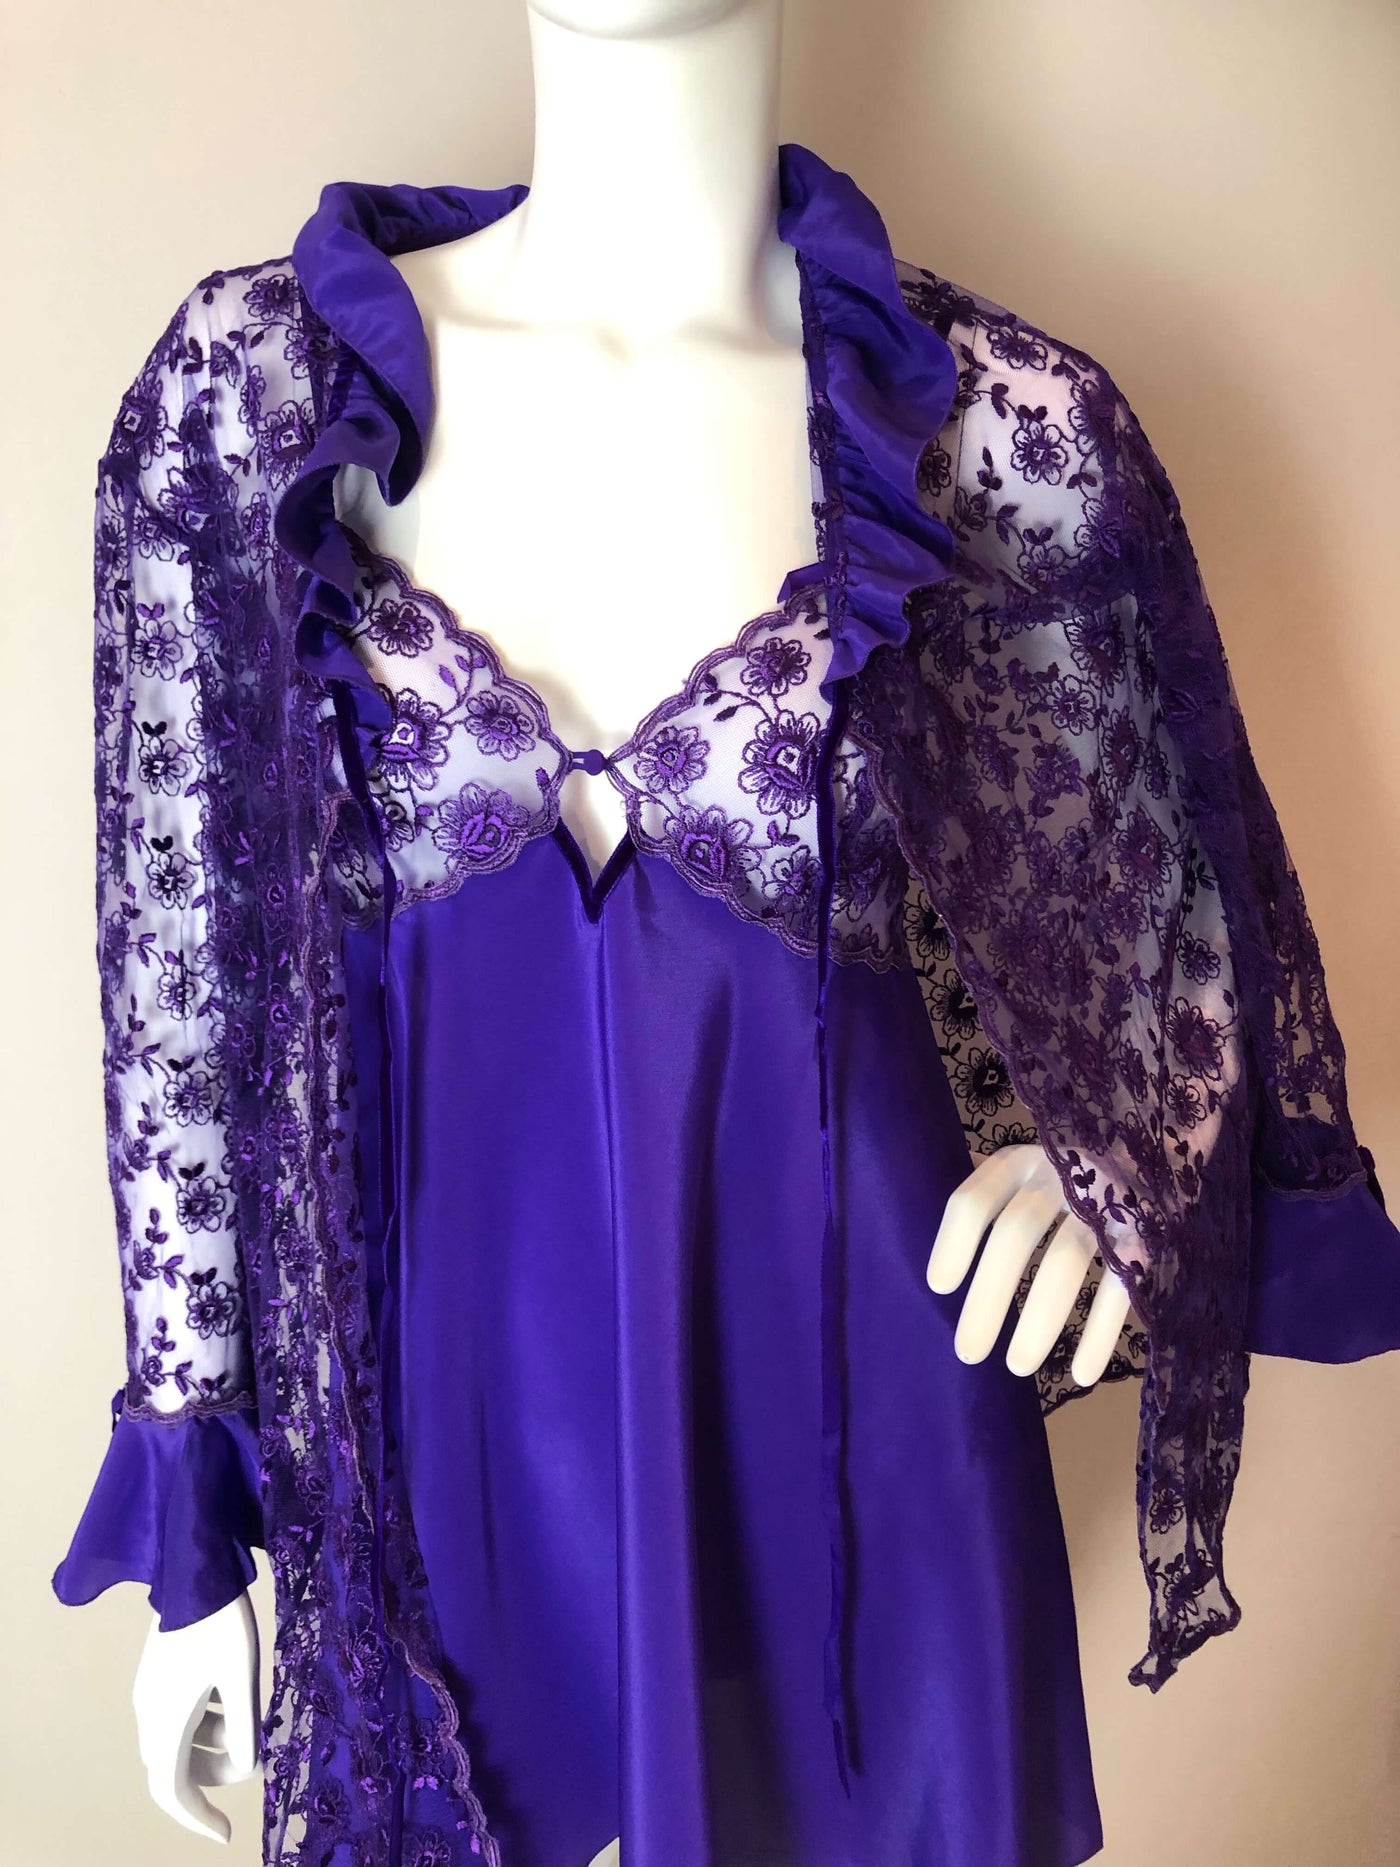 Purple Janet Reger babydoll dress with lace jacket